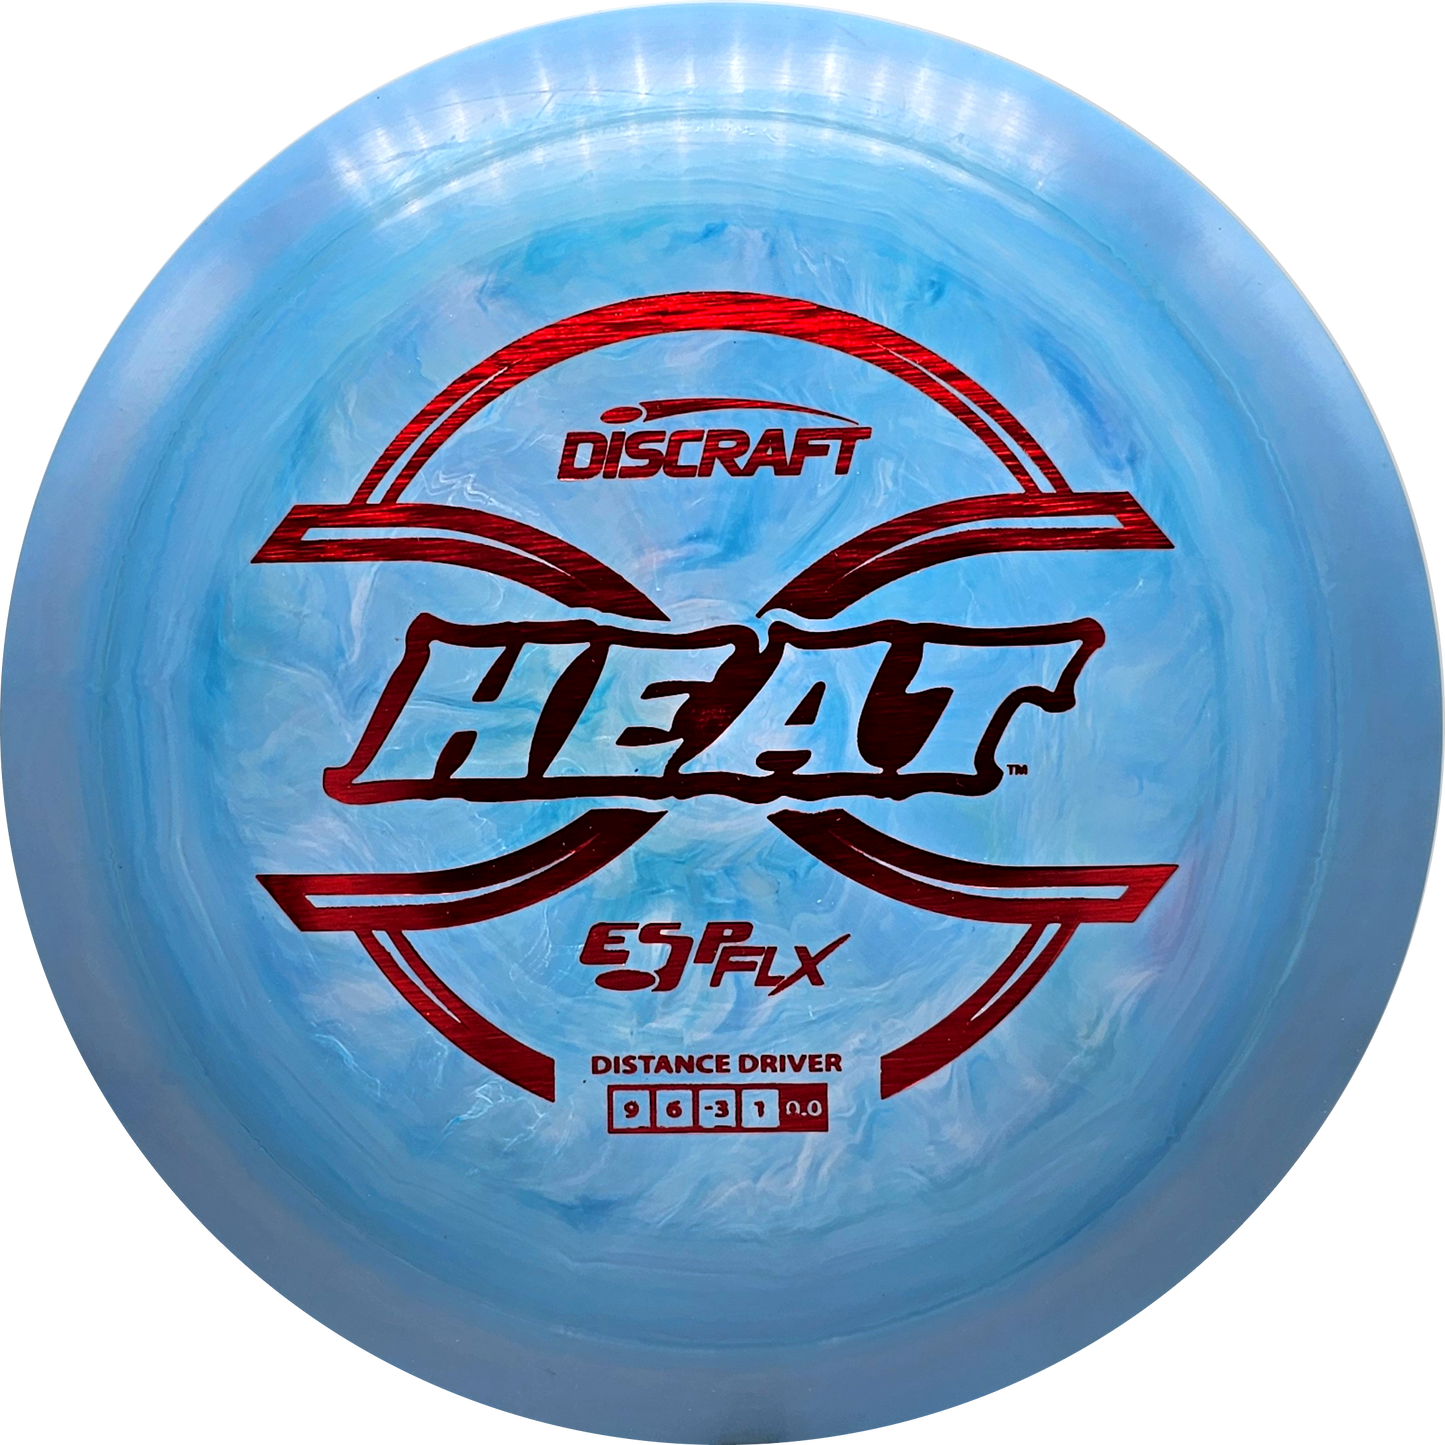 Discraft Heat ESP FLX